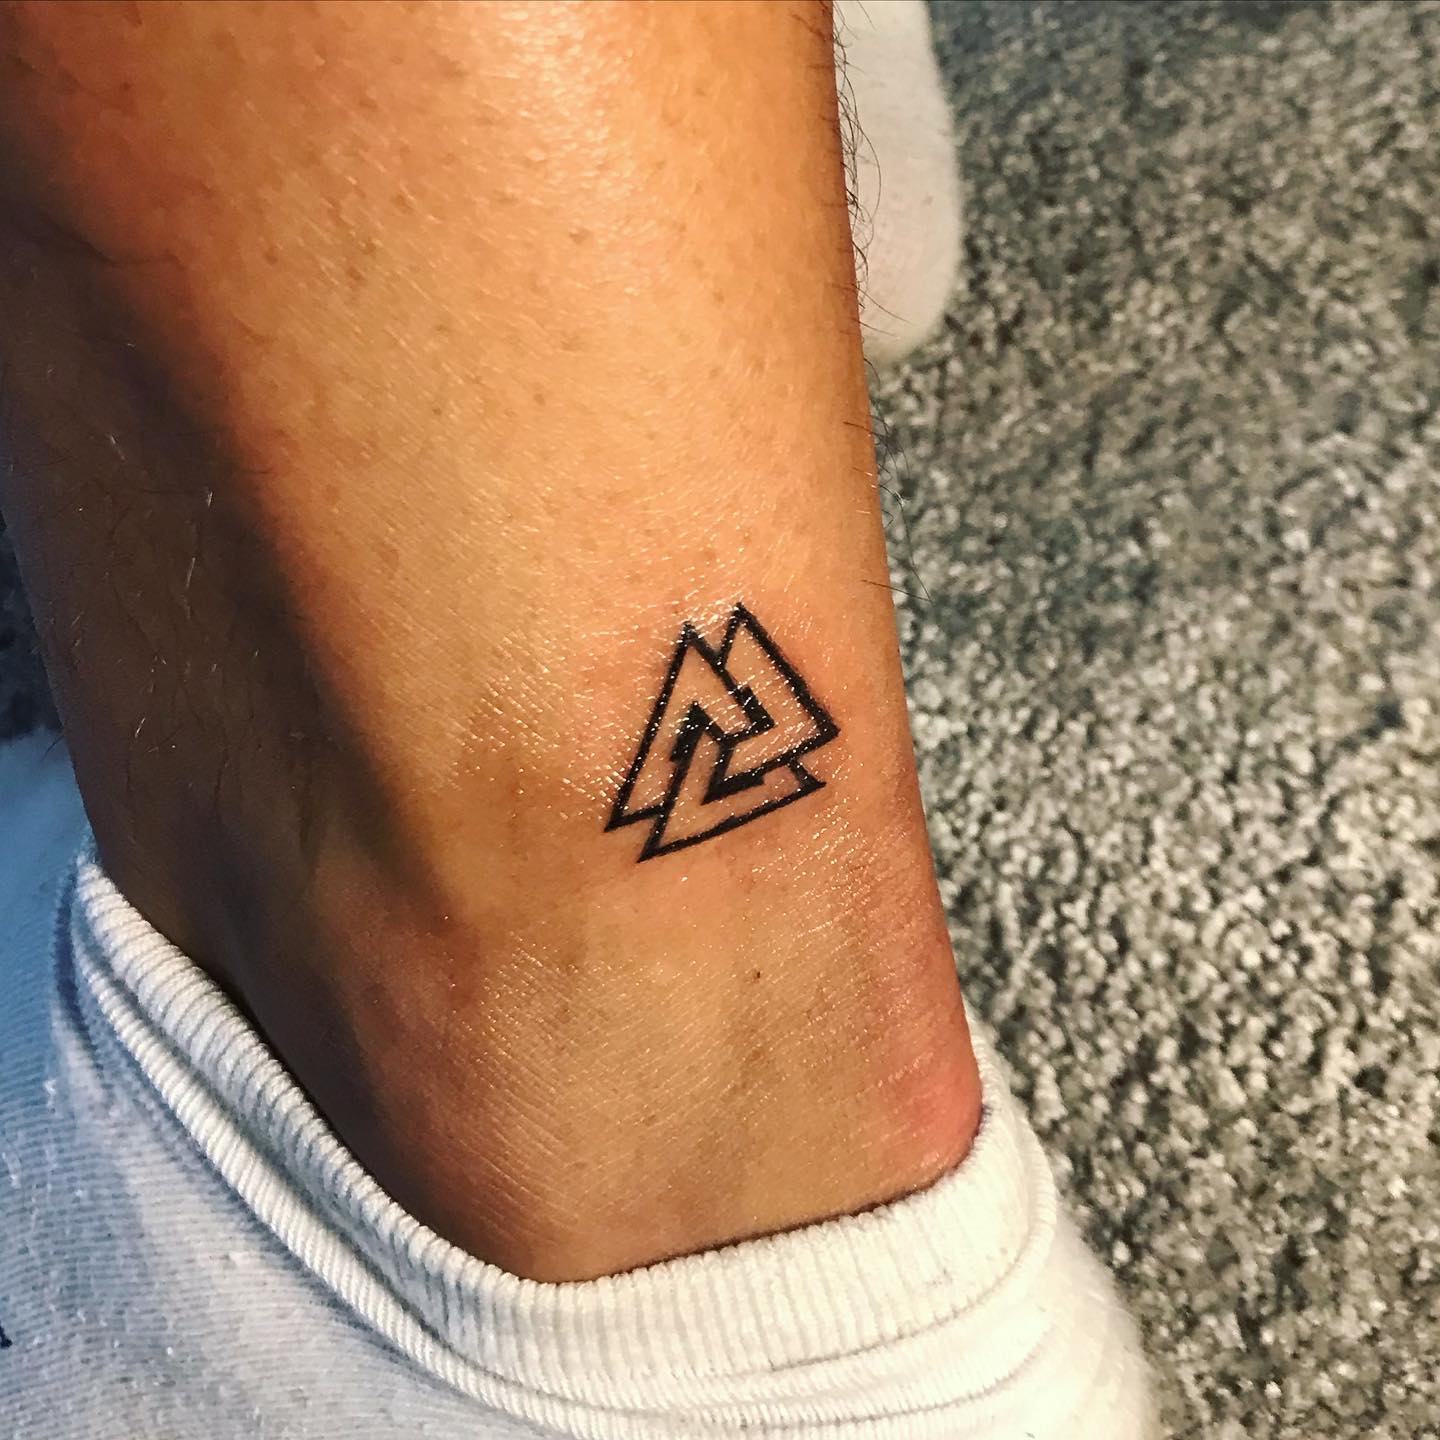 Triangle tattoo | Tattoo contest | 99designs